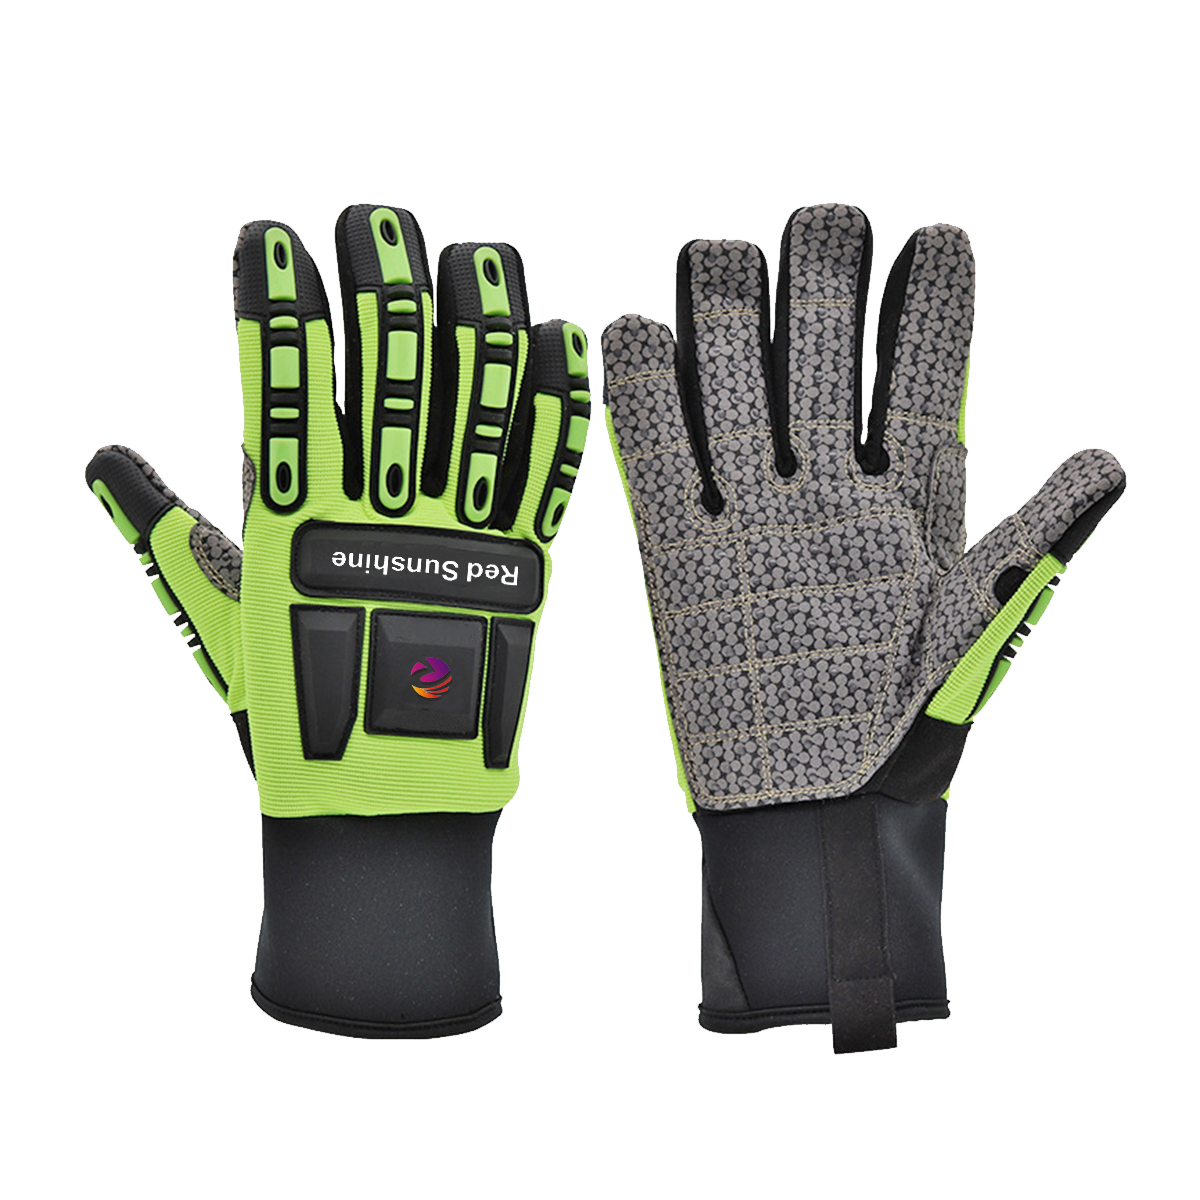 Mataas na kalidad na Silicone Coated Palm Impact resistant Gloves TPR Work Mechanic Safety Gloves na guwantes na langis at gas